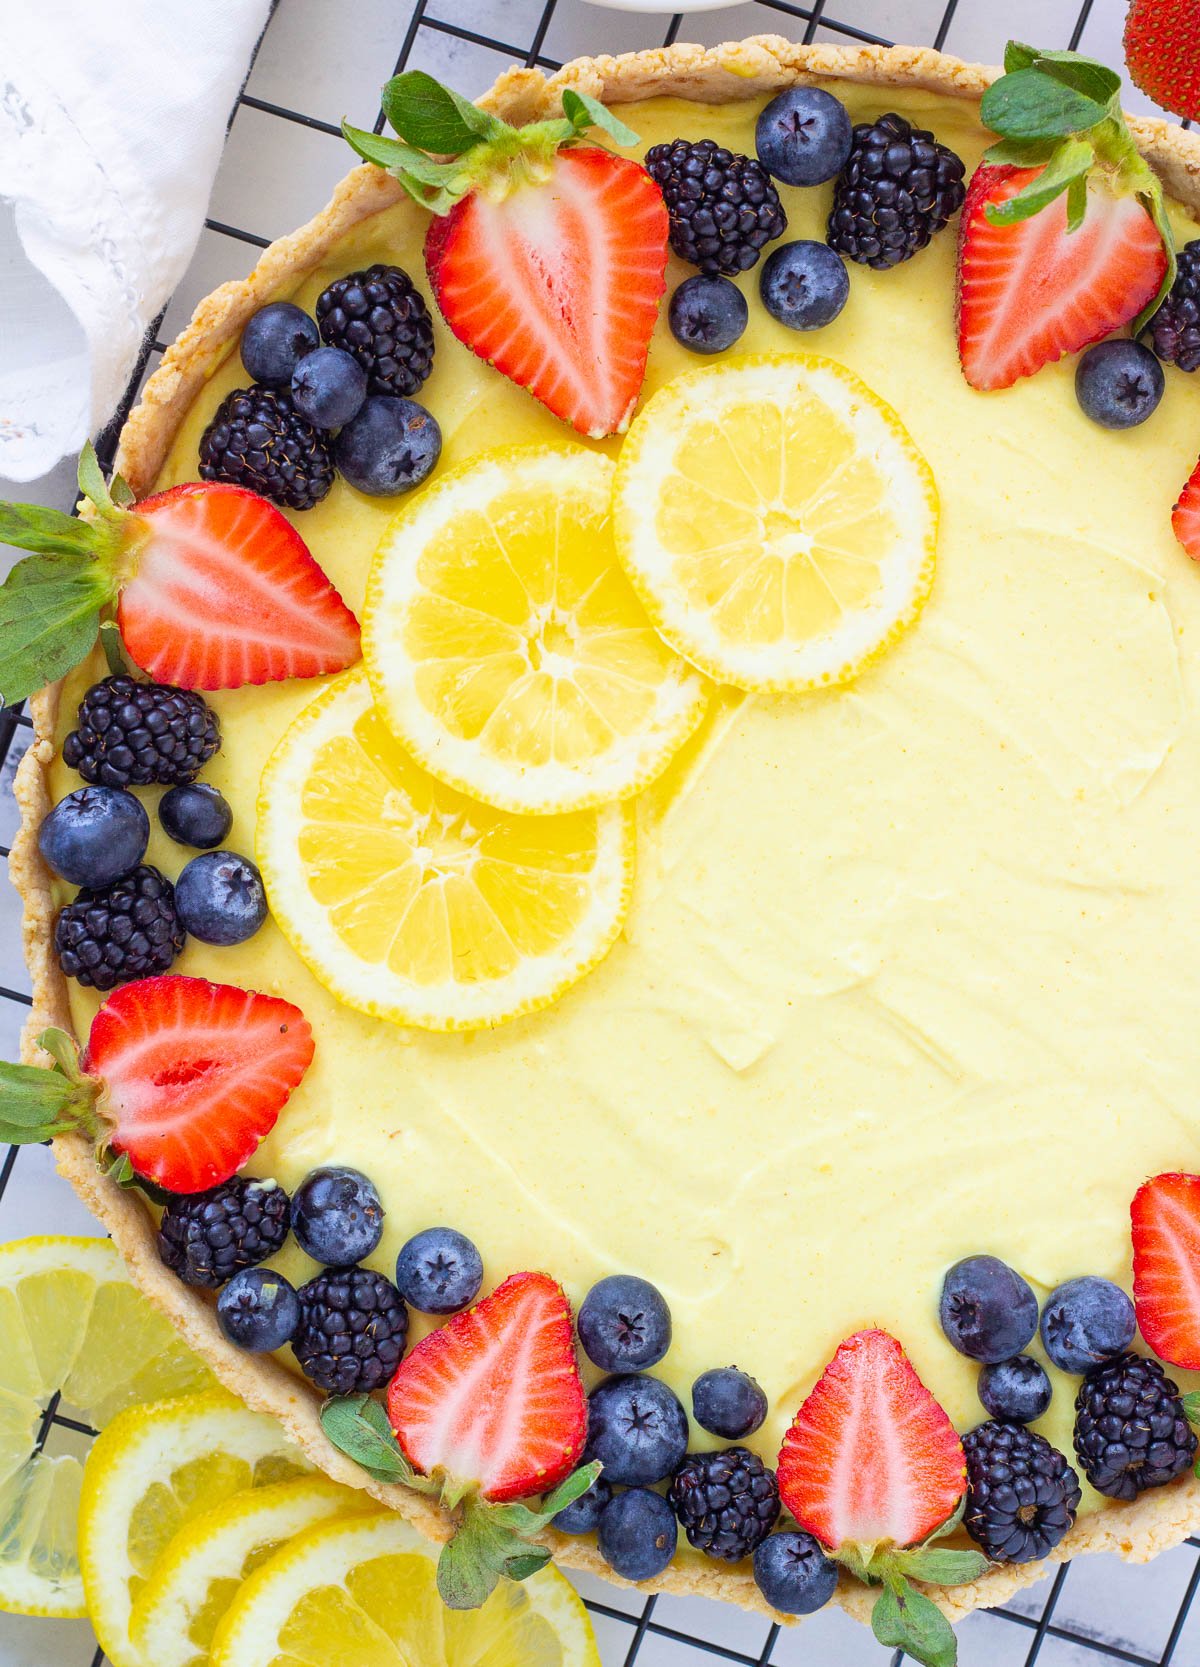 Vegan tart topped with lemon slices, and fresh berries.